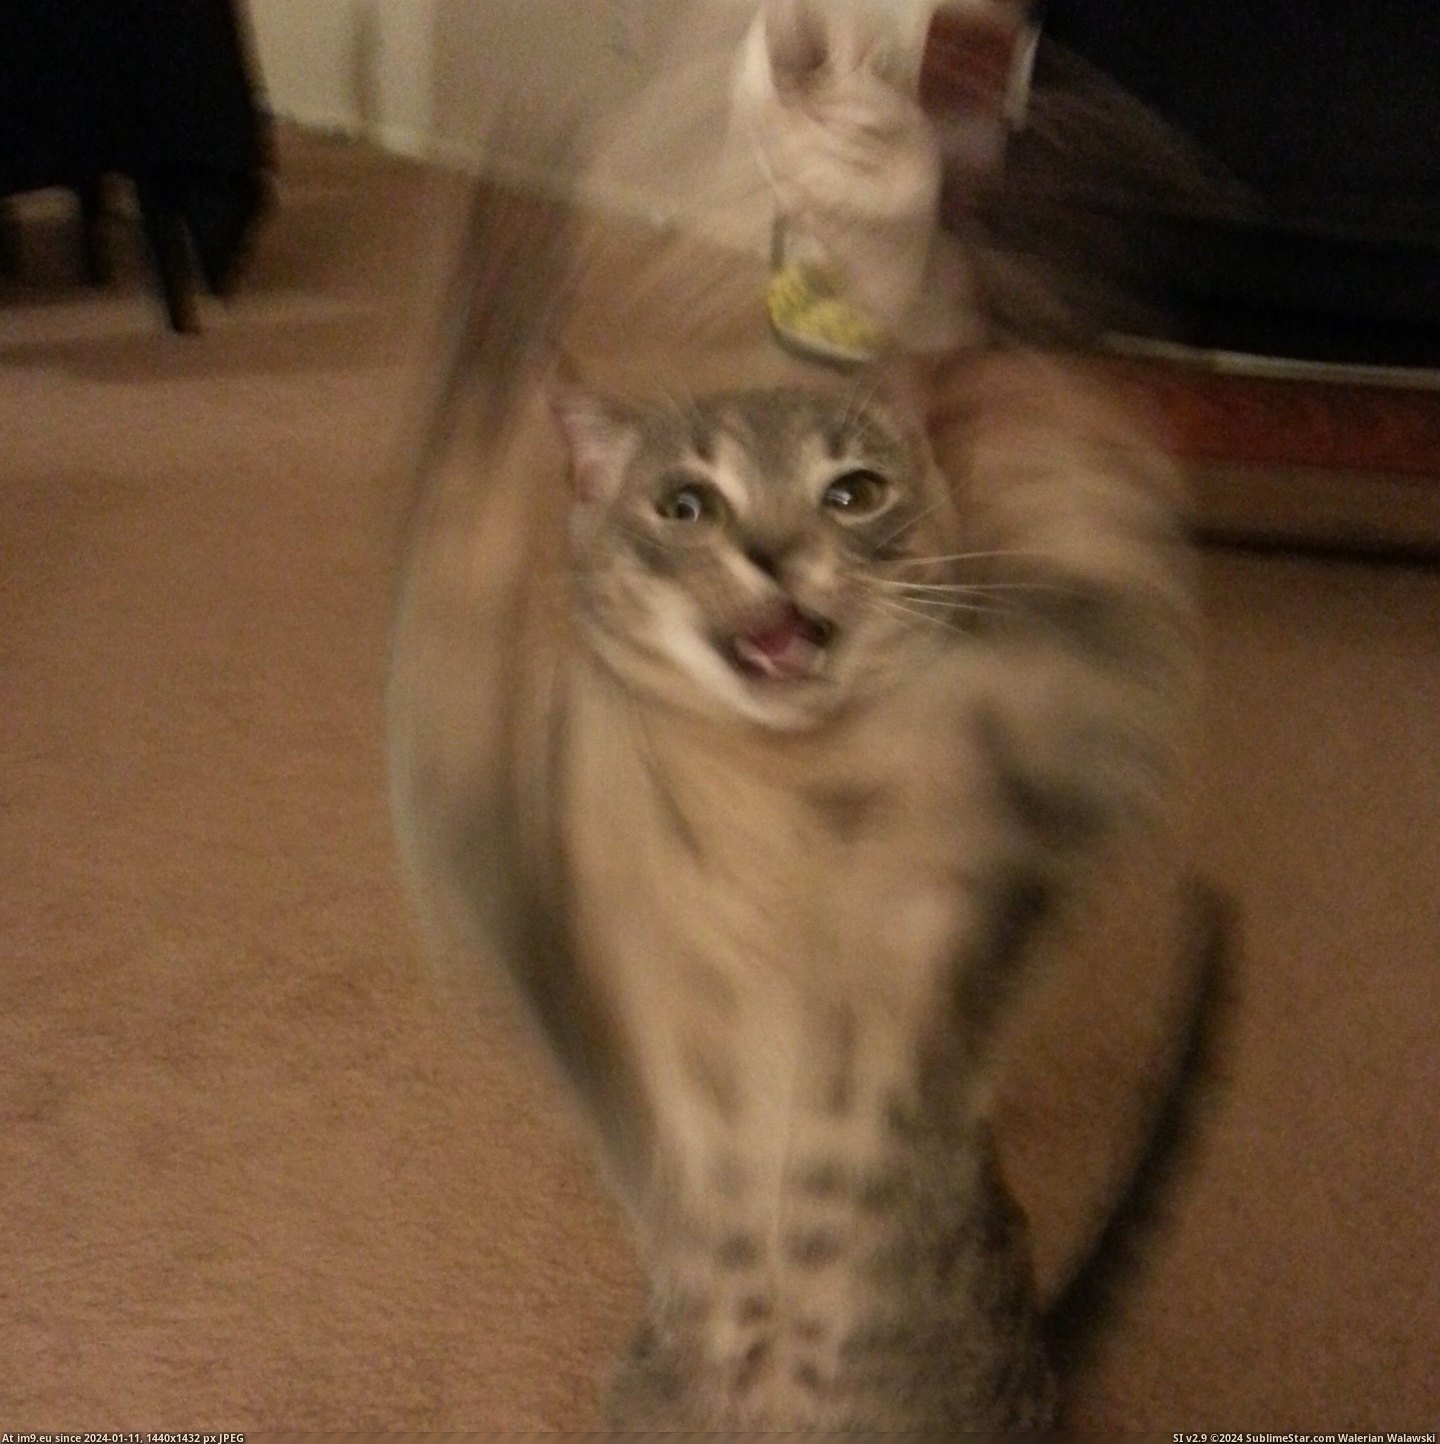 #Cats #Matrix #Kitty [Cats] Matrix kitty Pic. (Image of album My r/CATS favs))